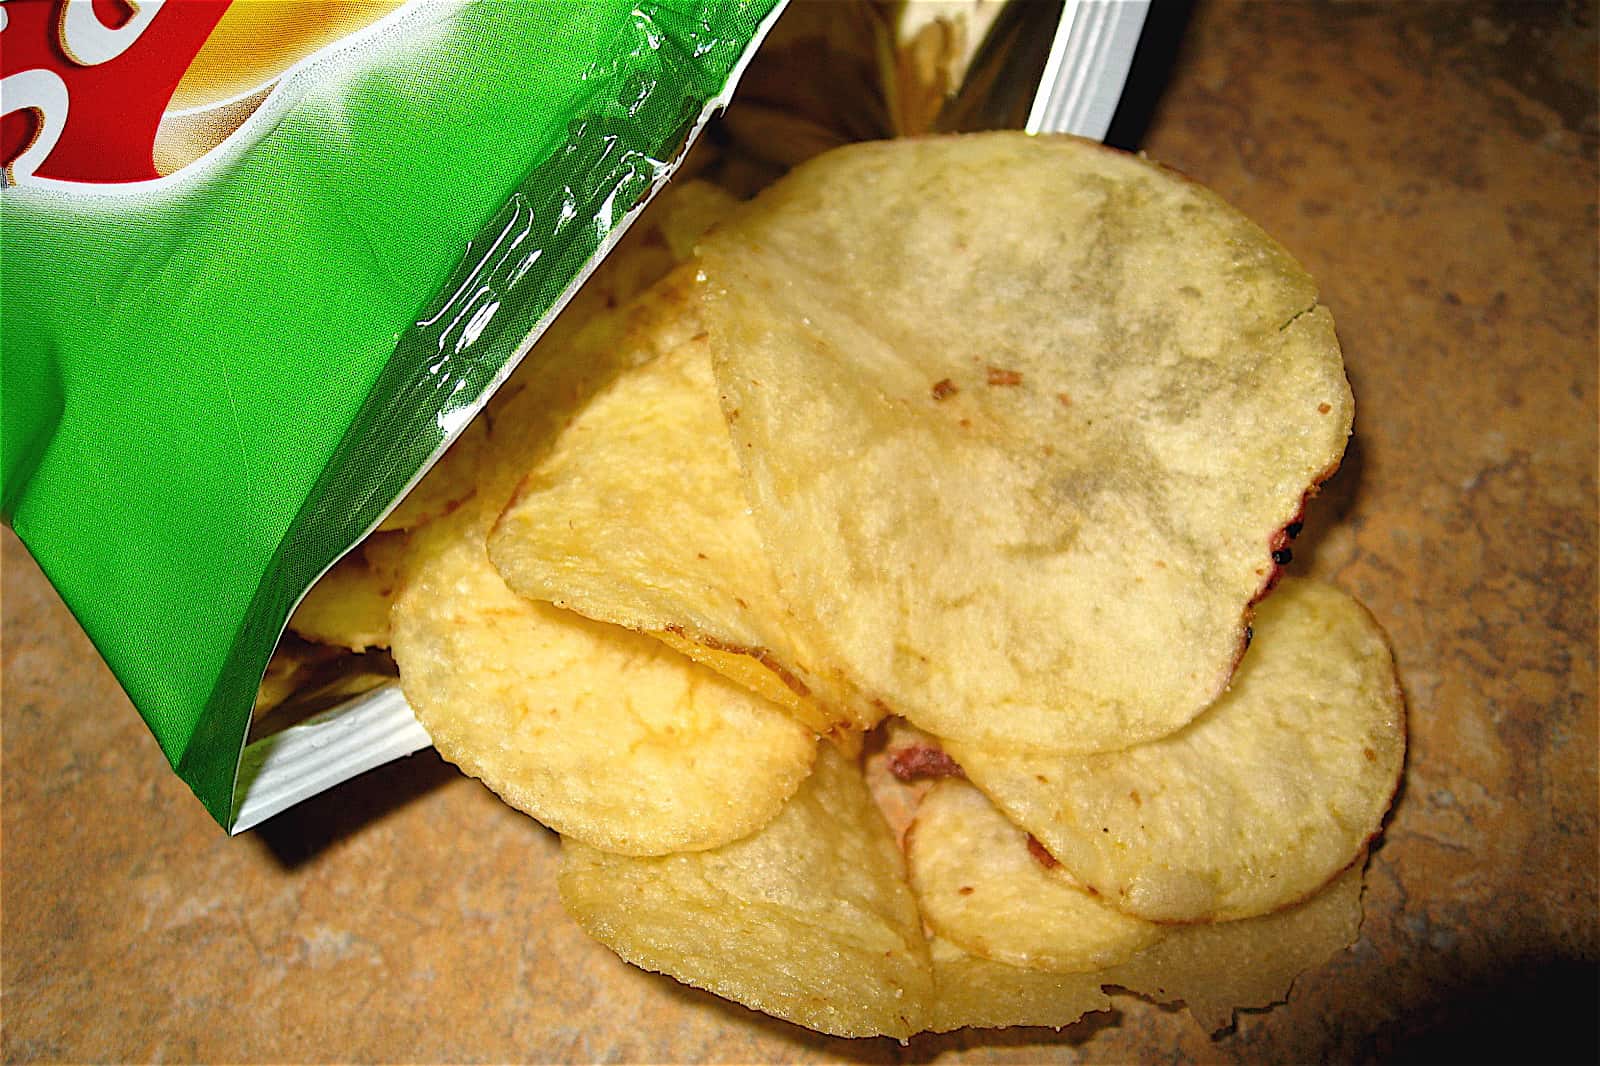 NZ chips = UK crisps